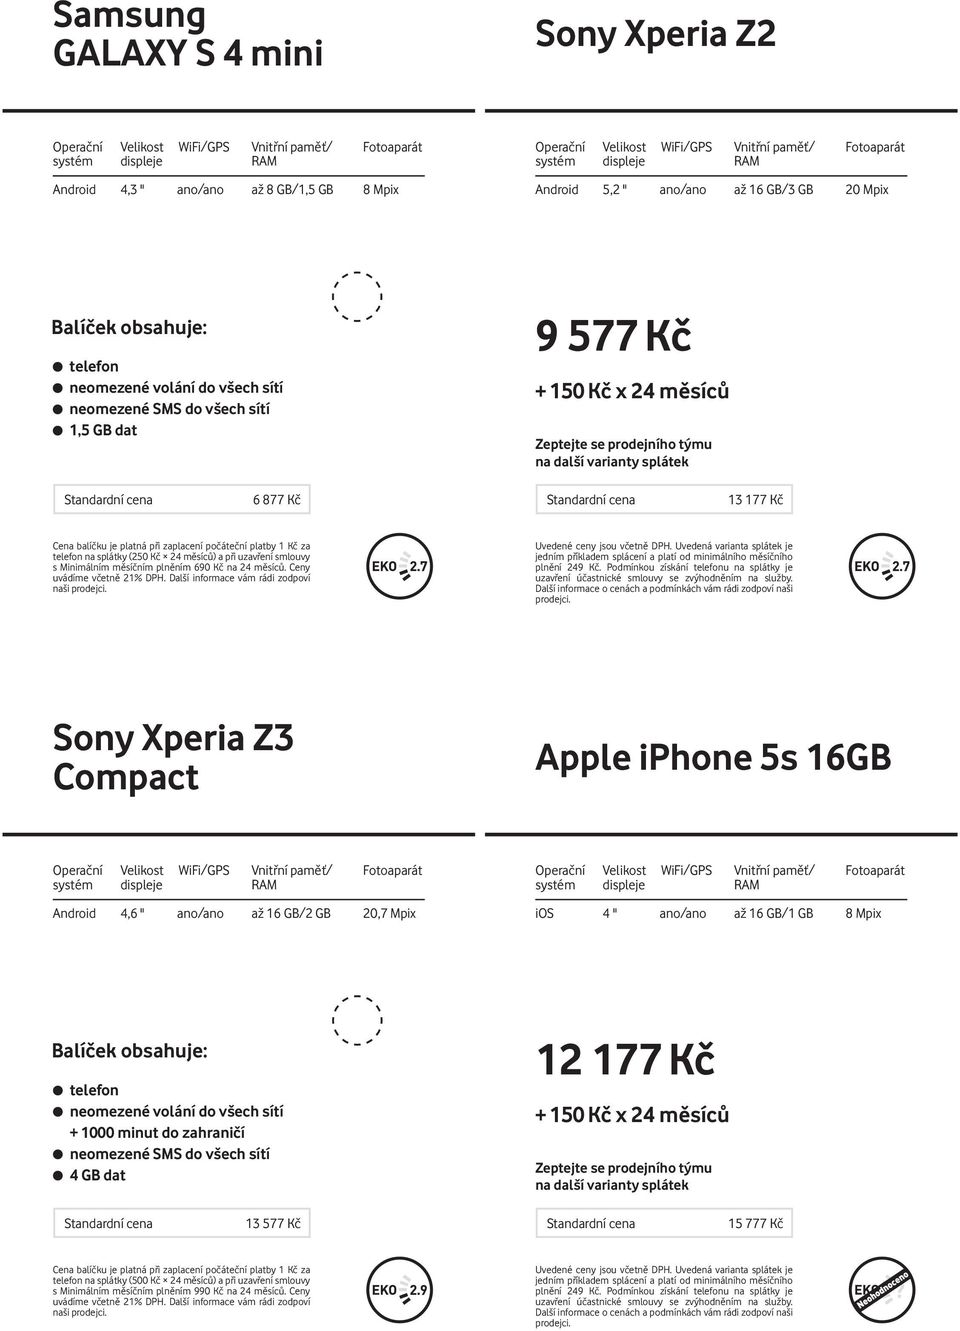 Ceny naši Sony Xperia Z3 Compact Apple iphone 5s 16GB Android 4,6 " ano/ano až 16 GB/2 GB 20,7 Mpix ios 4 " ano/ano až 16 GB/1 GB 8 Mpix neomezené volání do všech